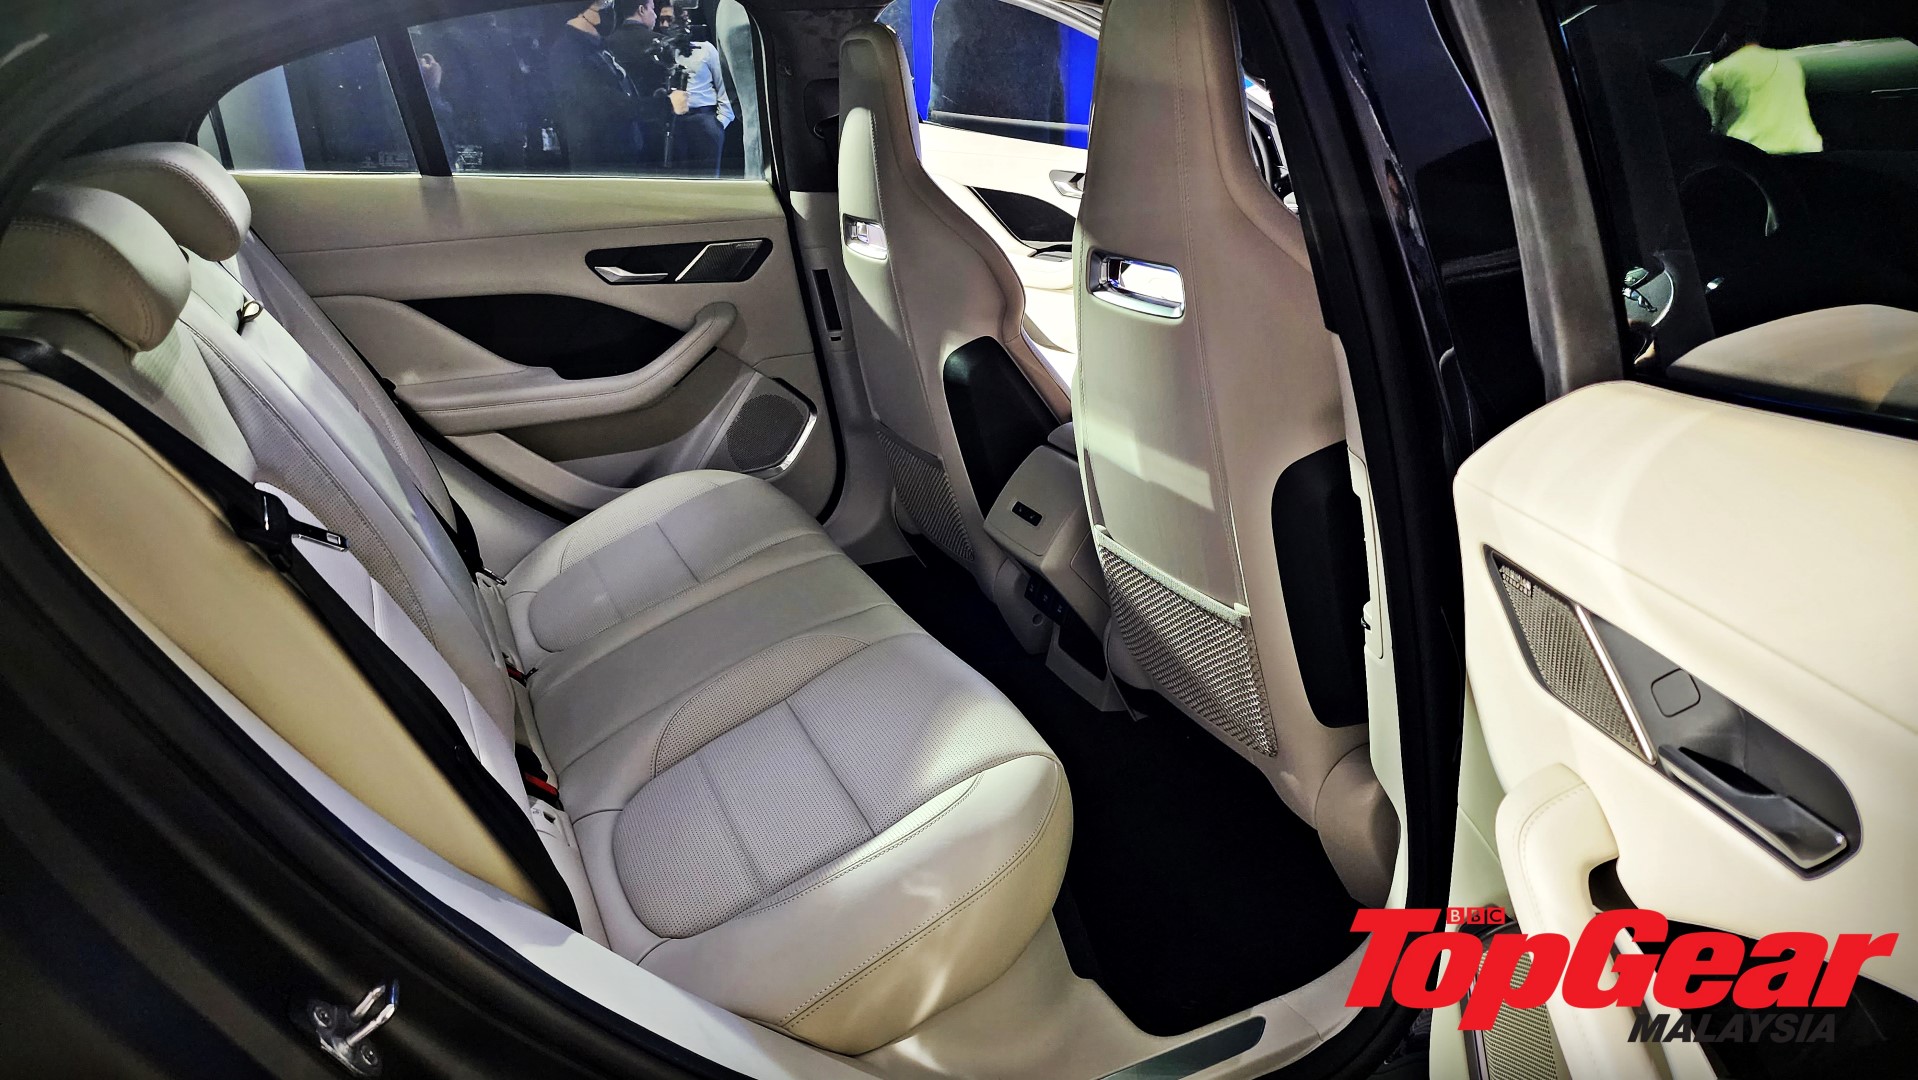 Jaguar I-PACE rear seats